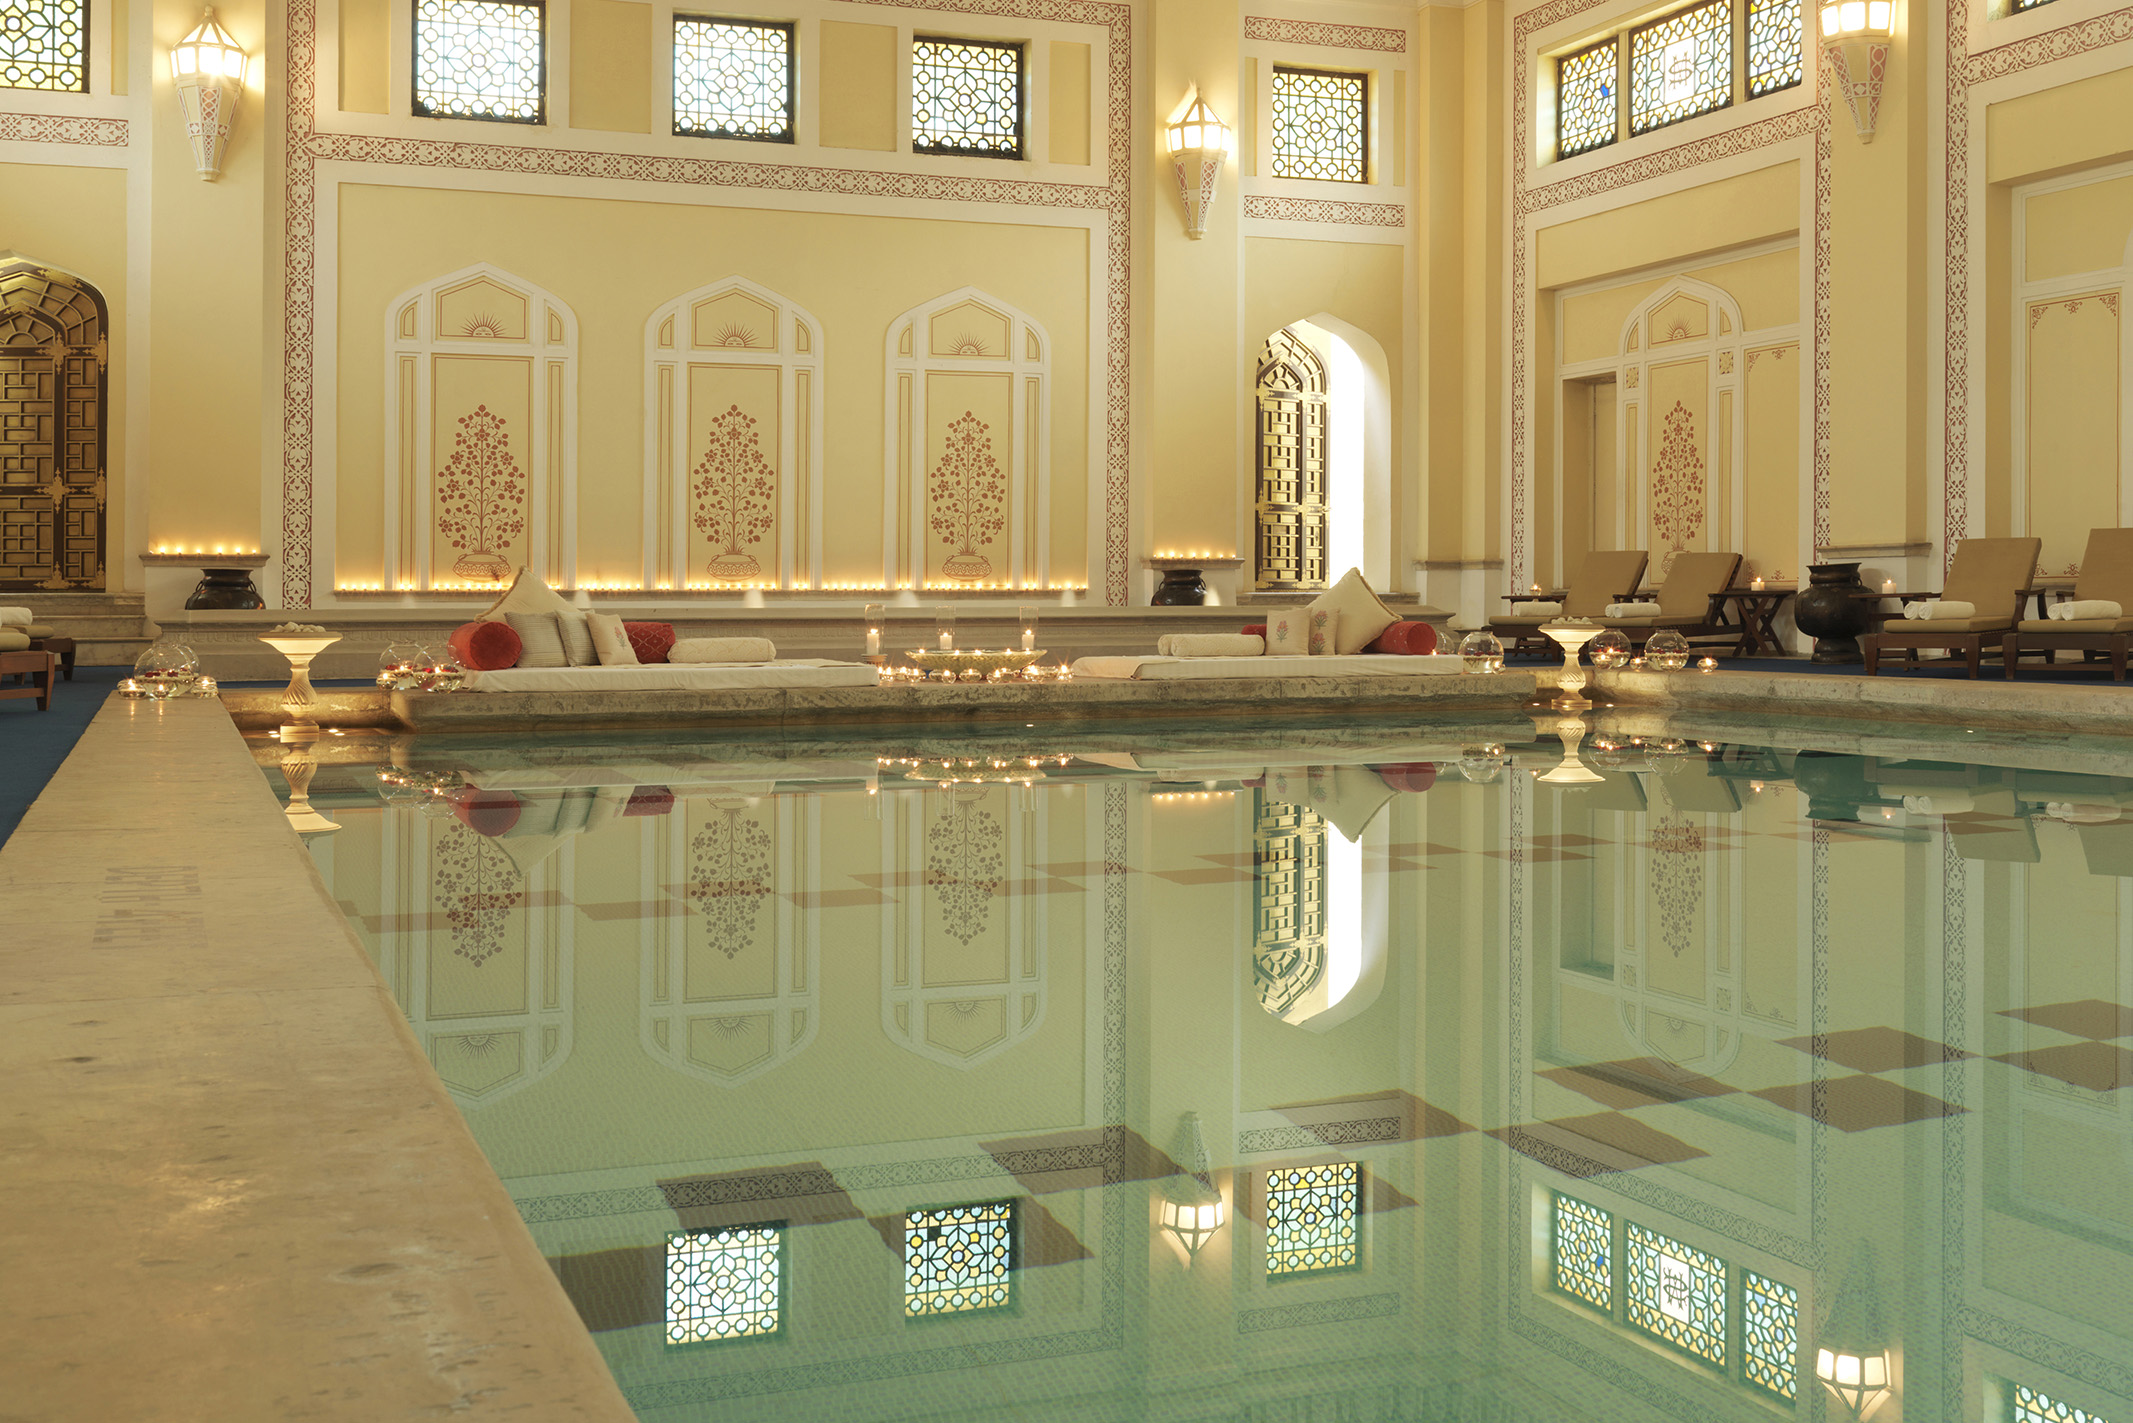 Your Guide To India’s 10 Most Unique Hotel Pools - Design Pataki